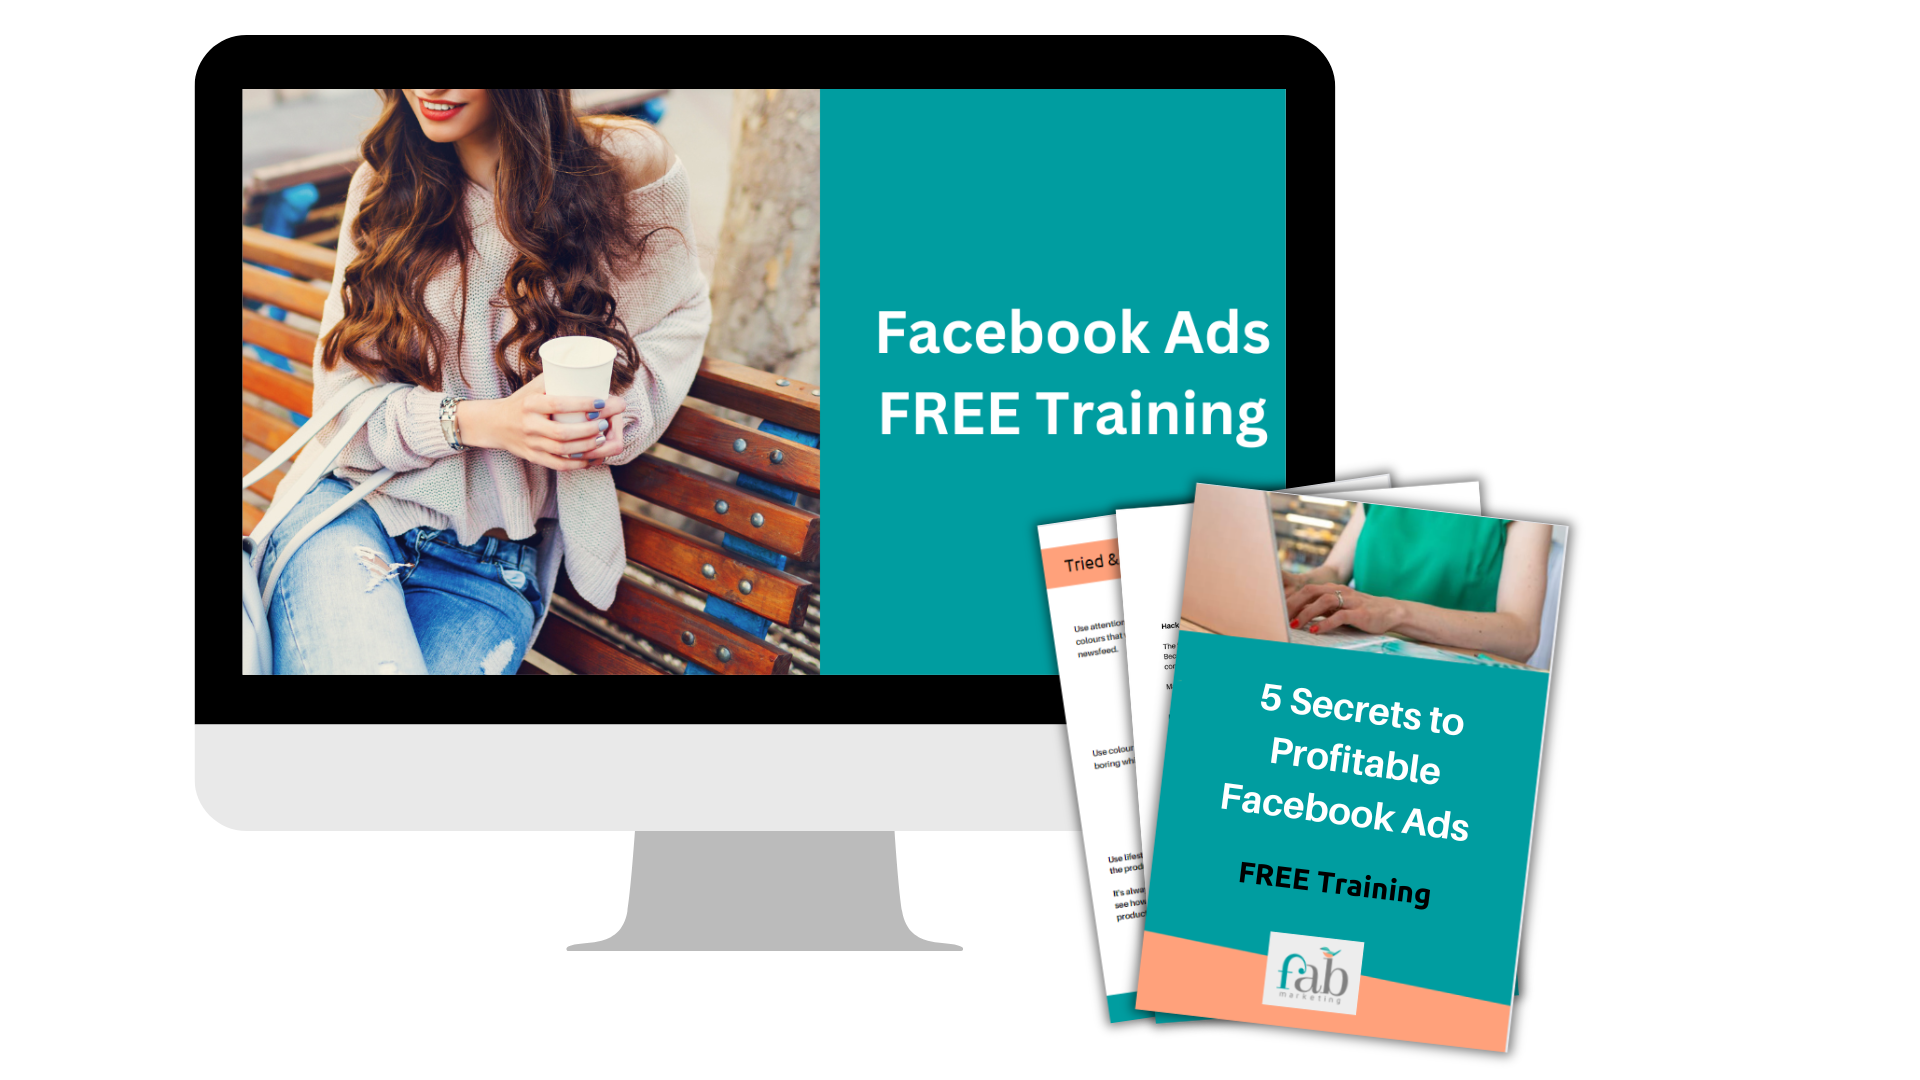 Facebook ads FREE Training